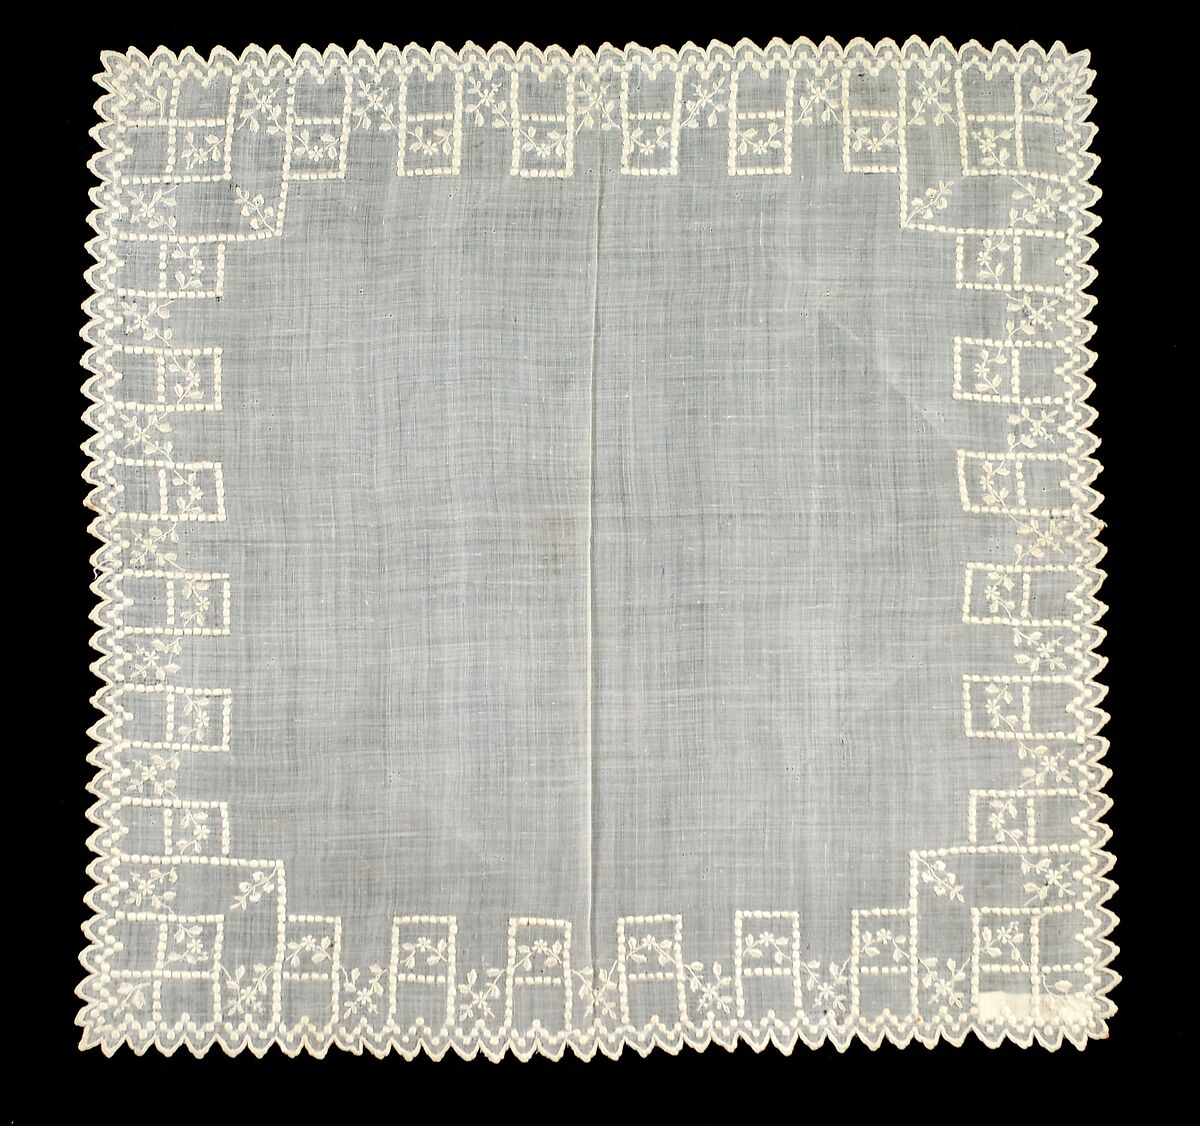 Handkerchief, Cotton, French 